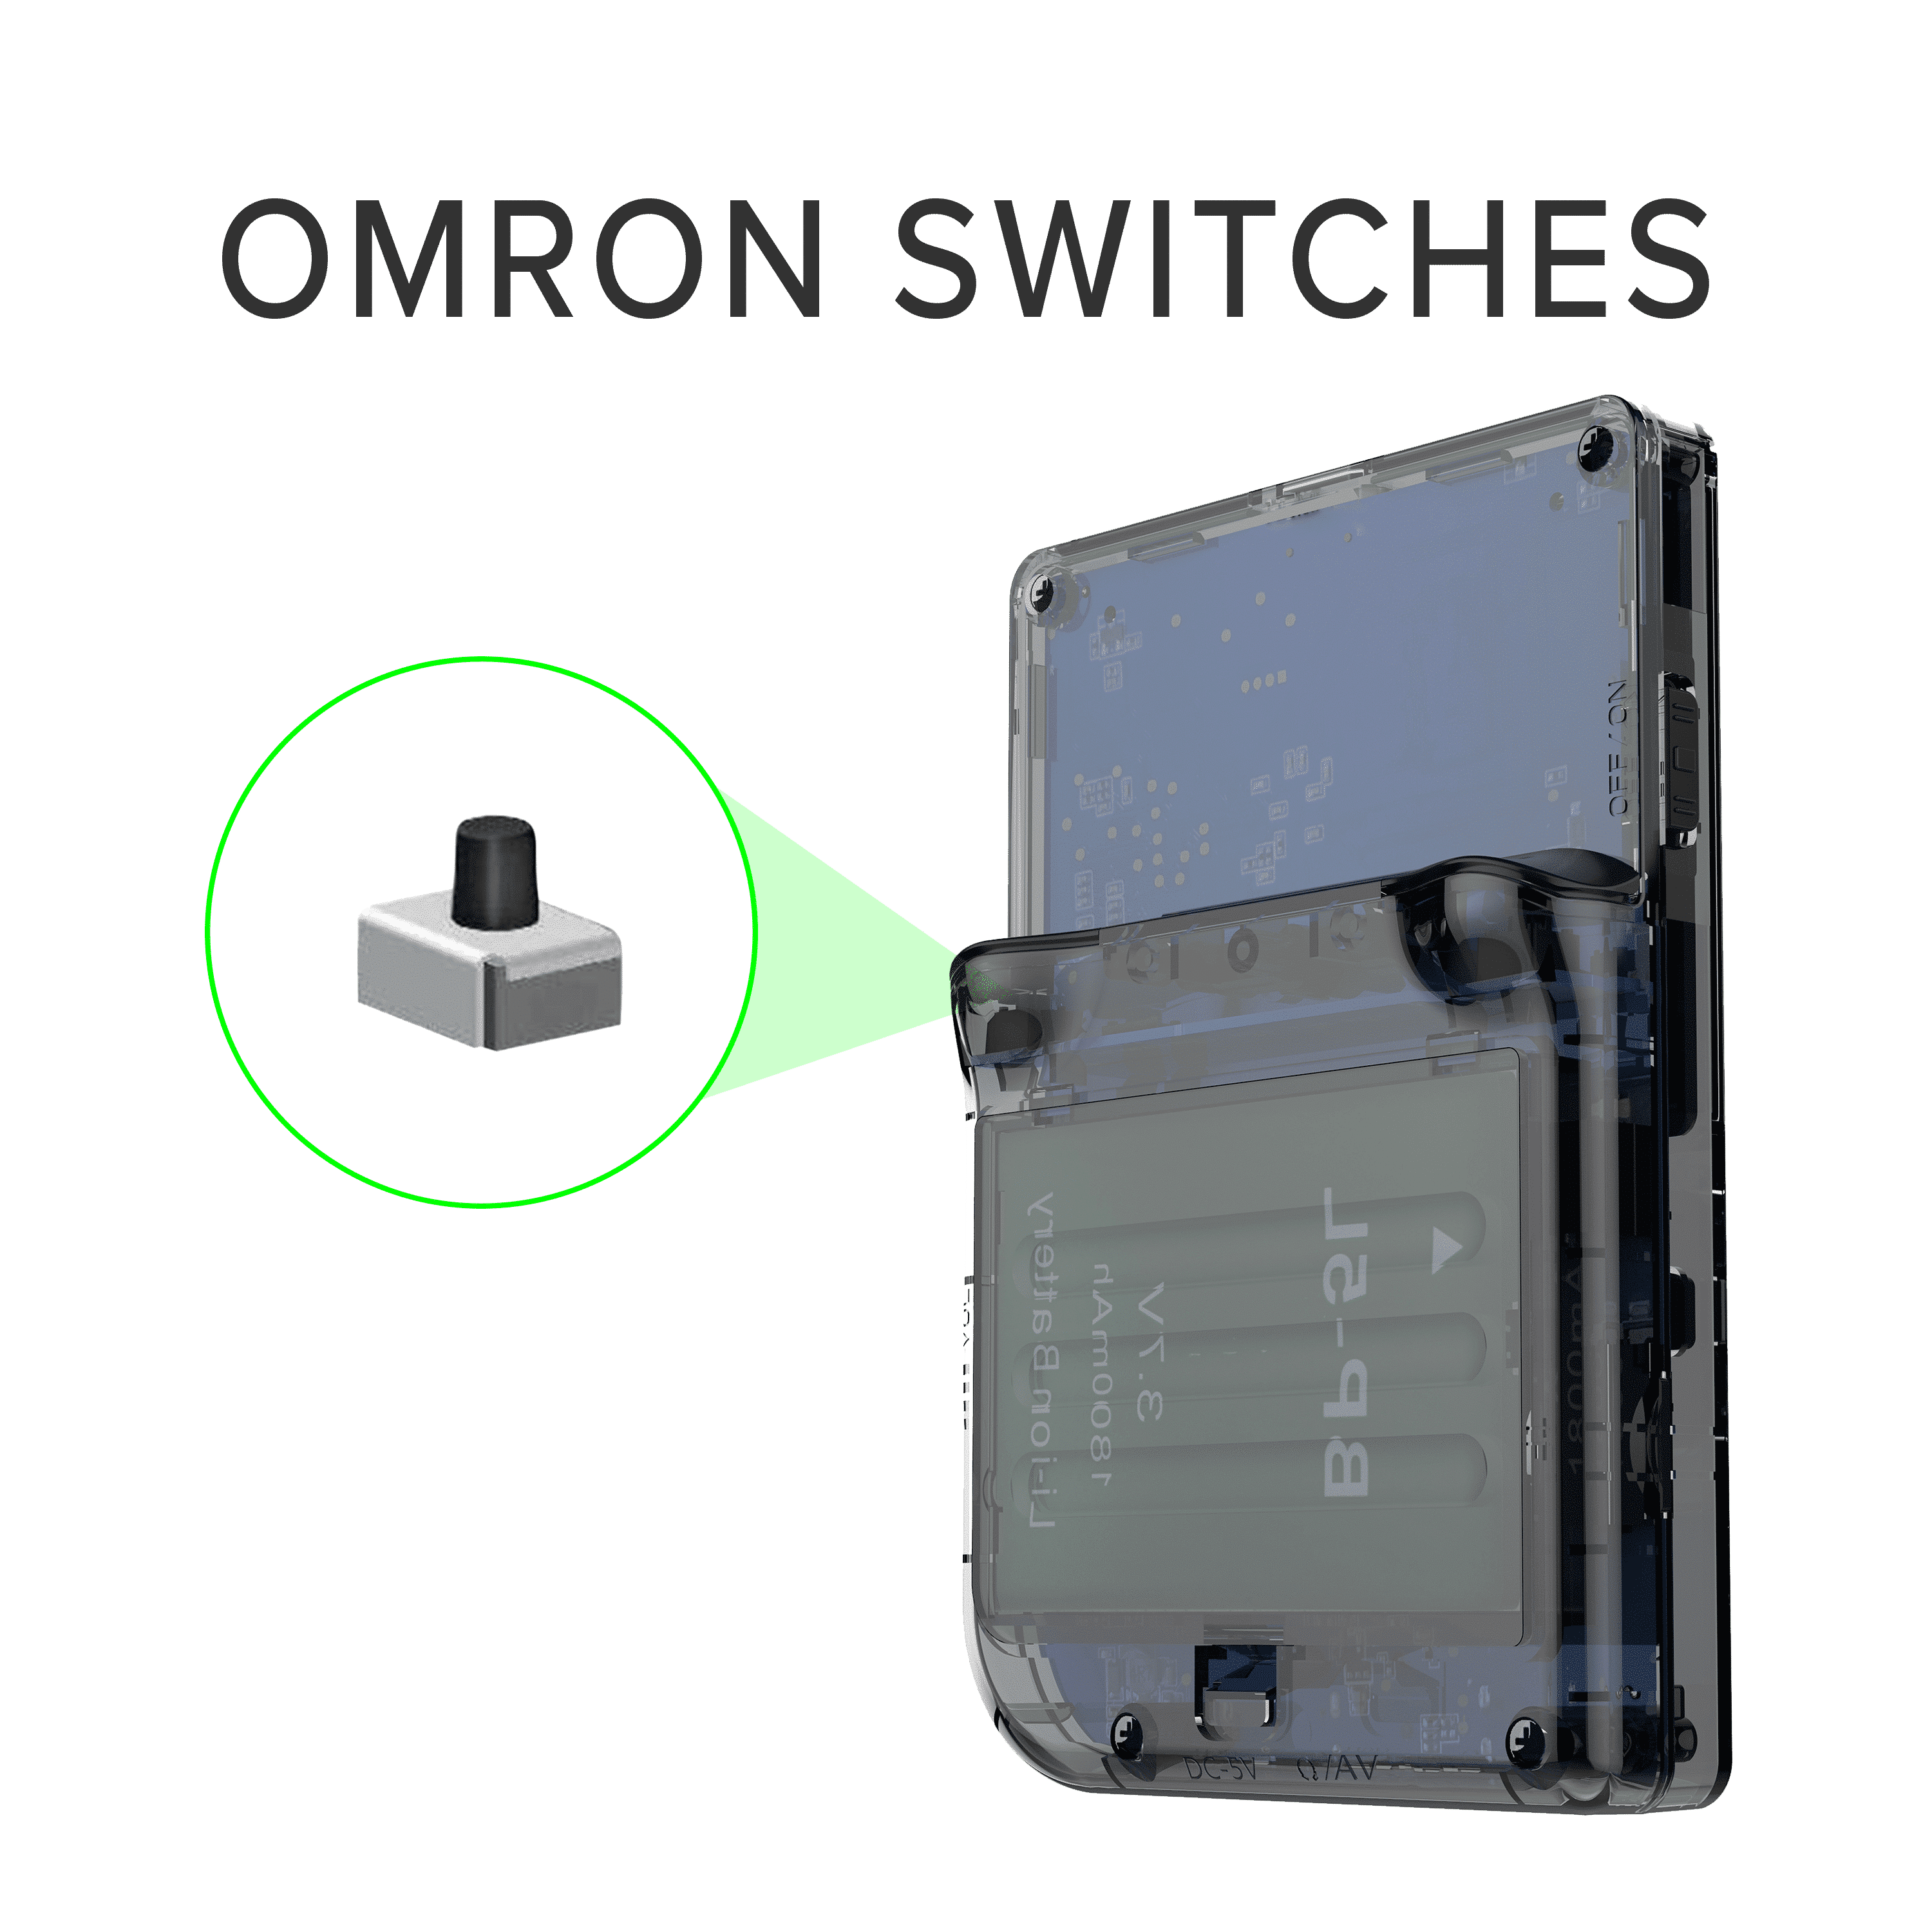 RG300 OpenDingux Retro Gaming Portable Handheld - Transparent Showcasing OMRON Switches